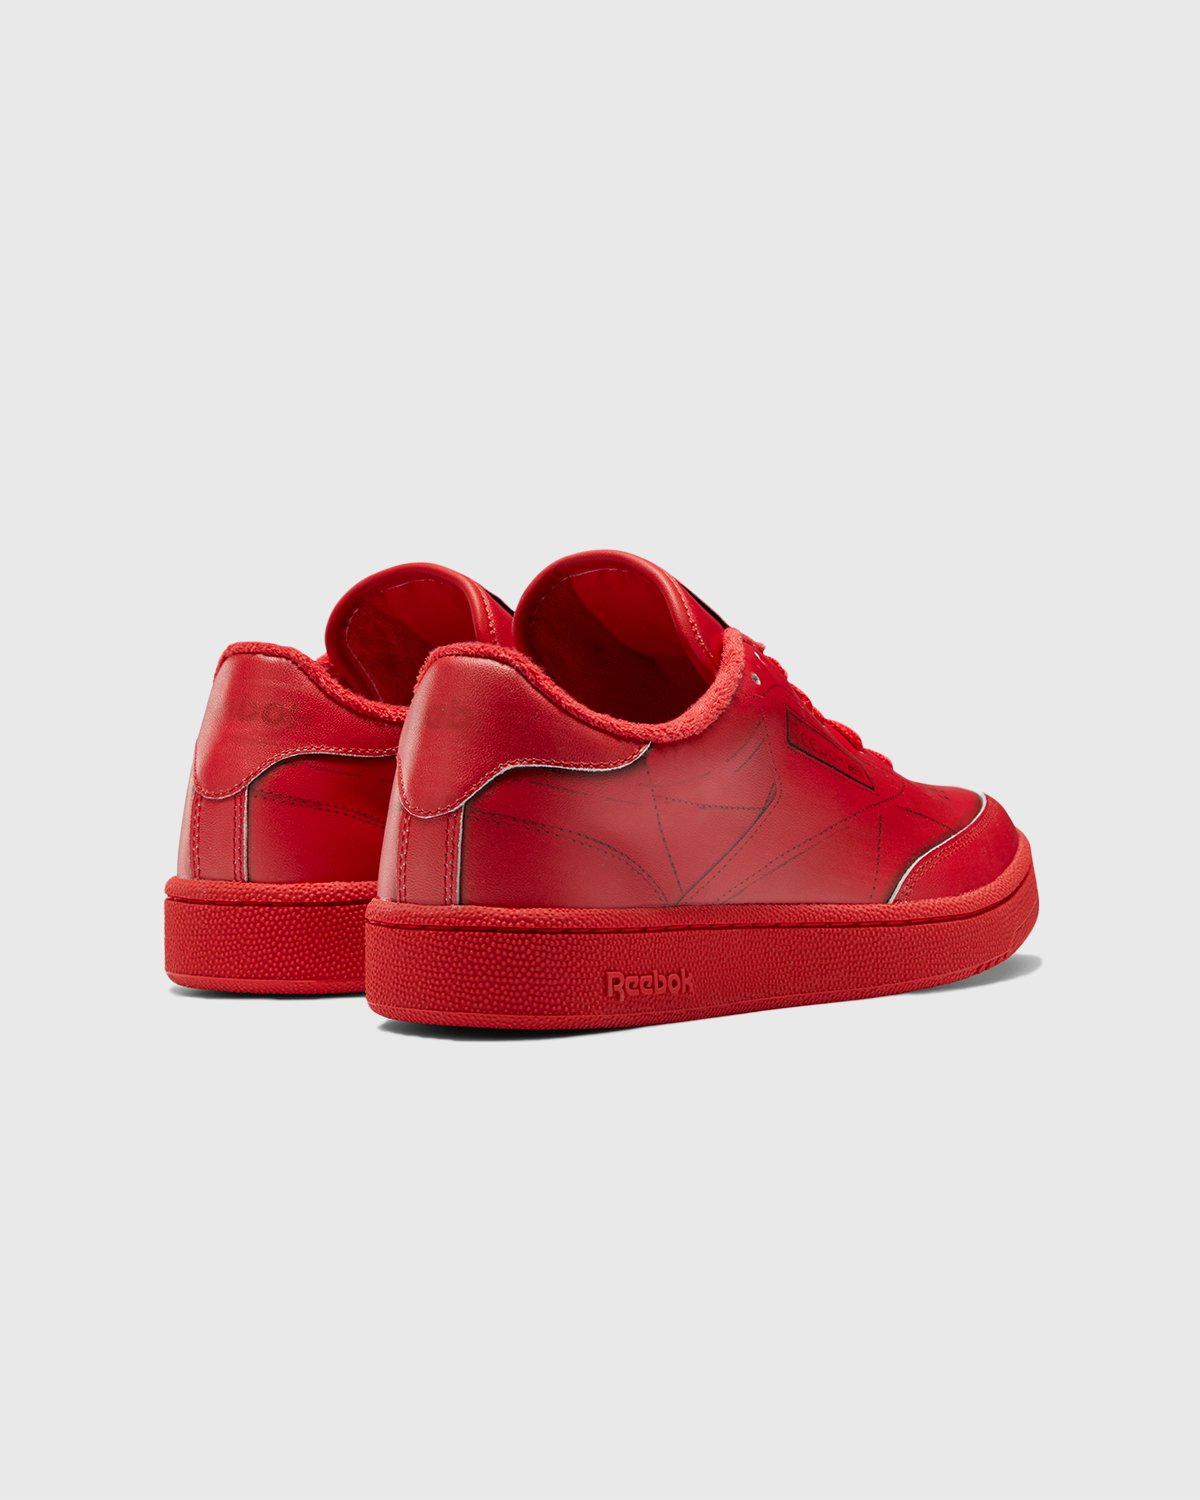 Maison Margiela x Reebok - Club C Trompe L’Oeil Red - Footwear - Red - Image 3